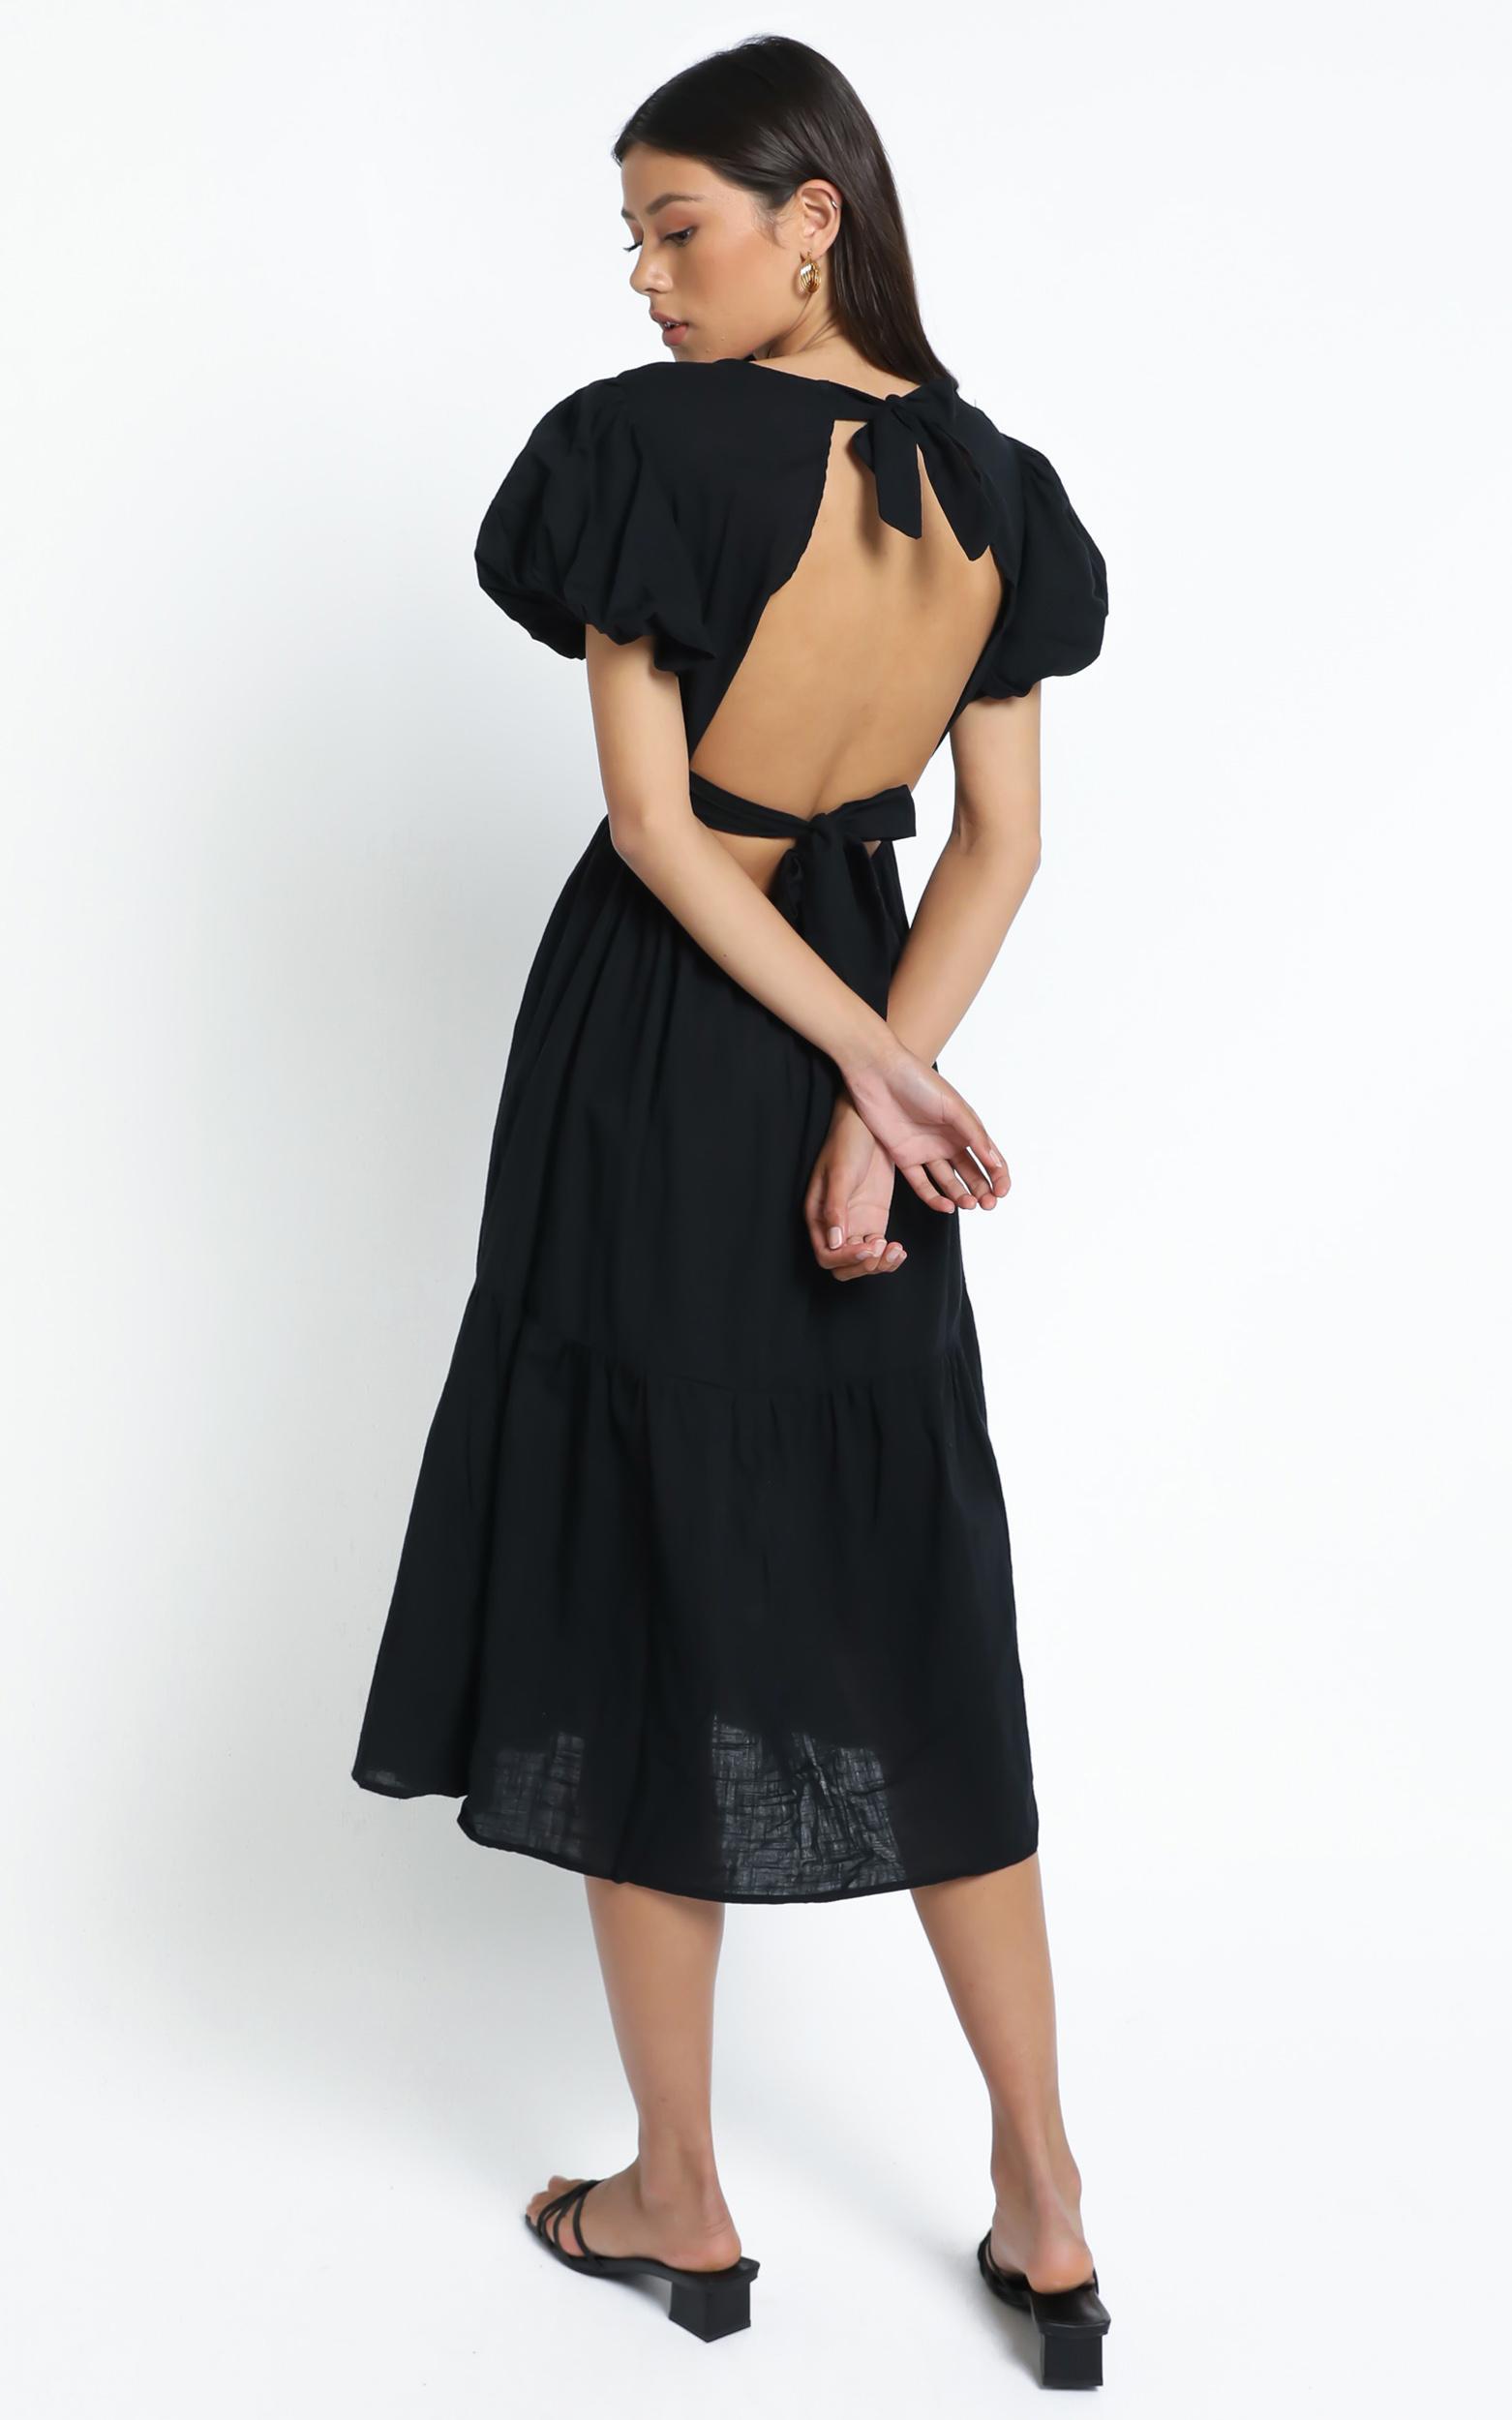 Details about   RaeLynn Black Dress Mini Size Cutout 